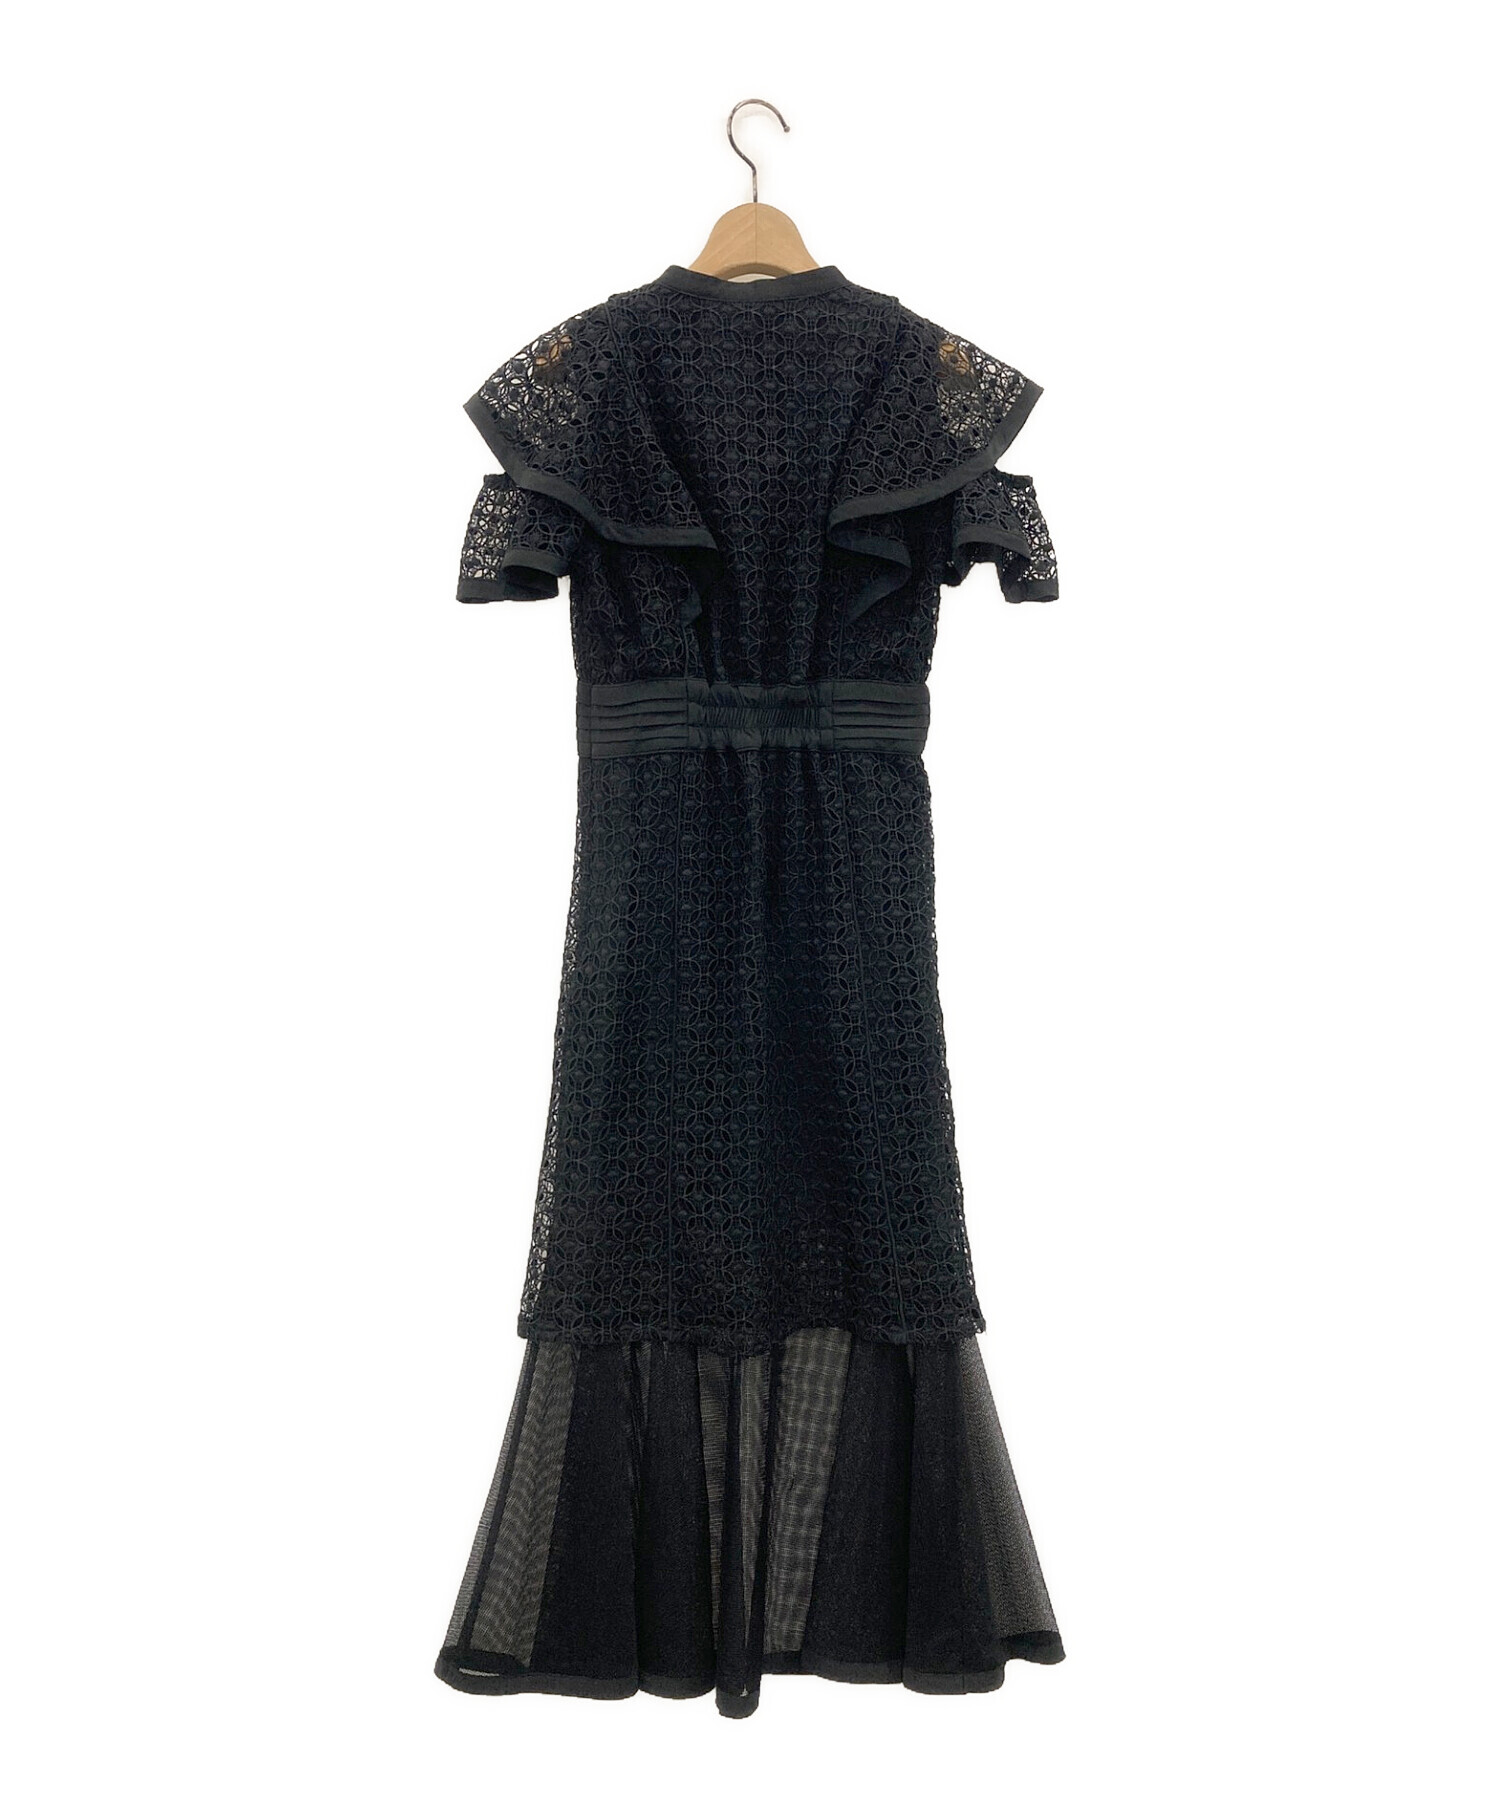 riu (リウ) Chemical lace piping dress ブラック サイズ:F